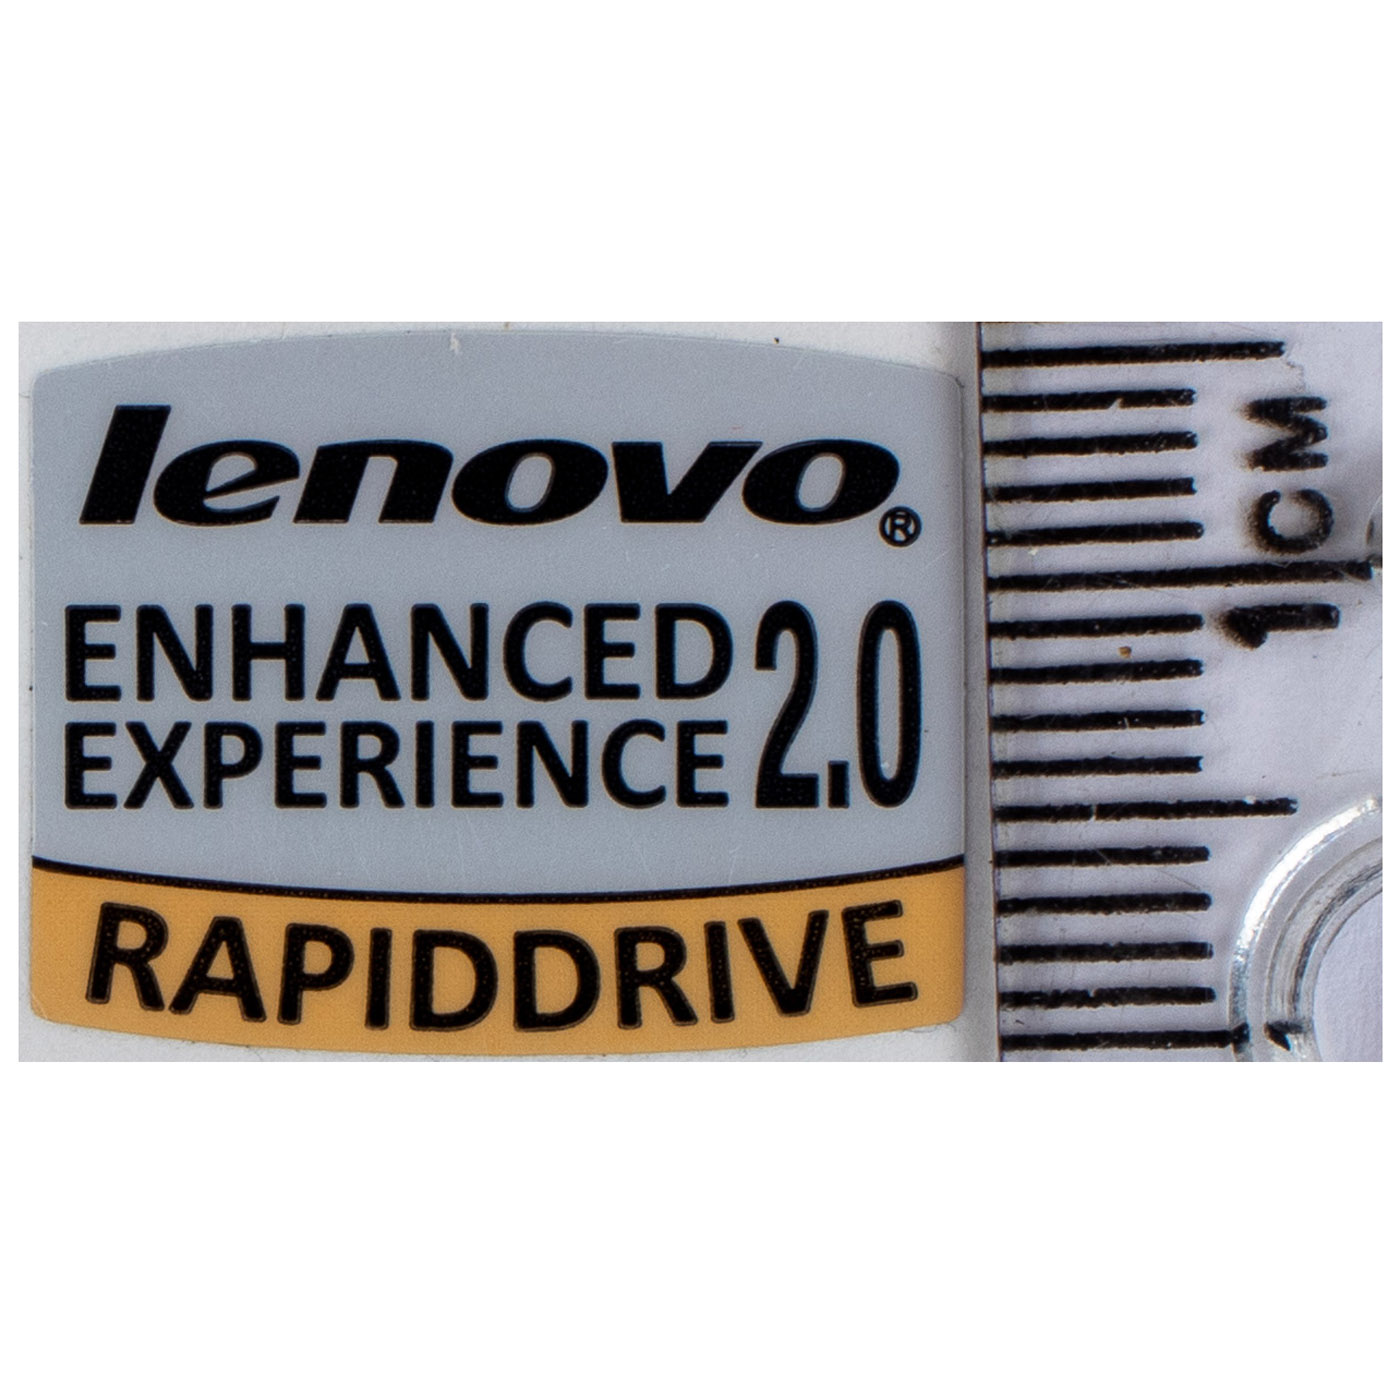 Naklejka Lenovo Enhanced 2.0 RAPIDDRIVE 20 x 16 mm